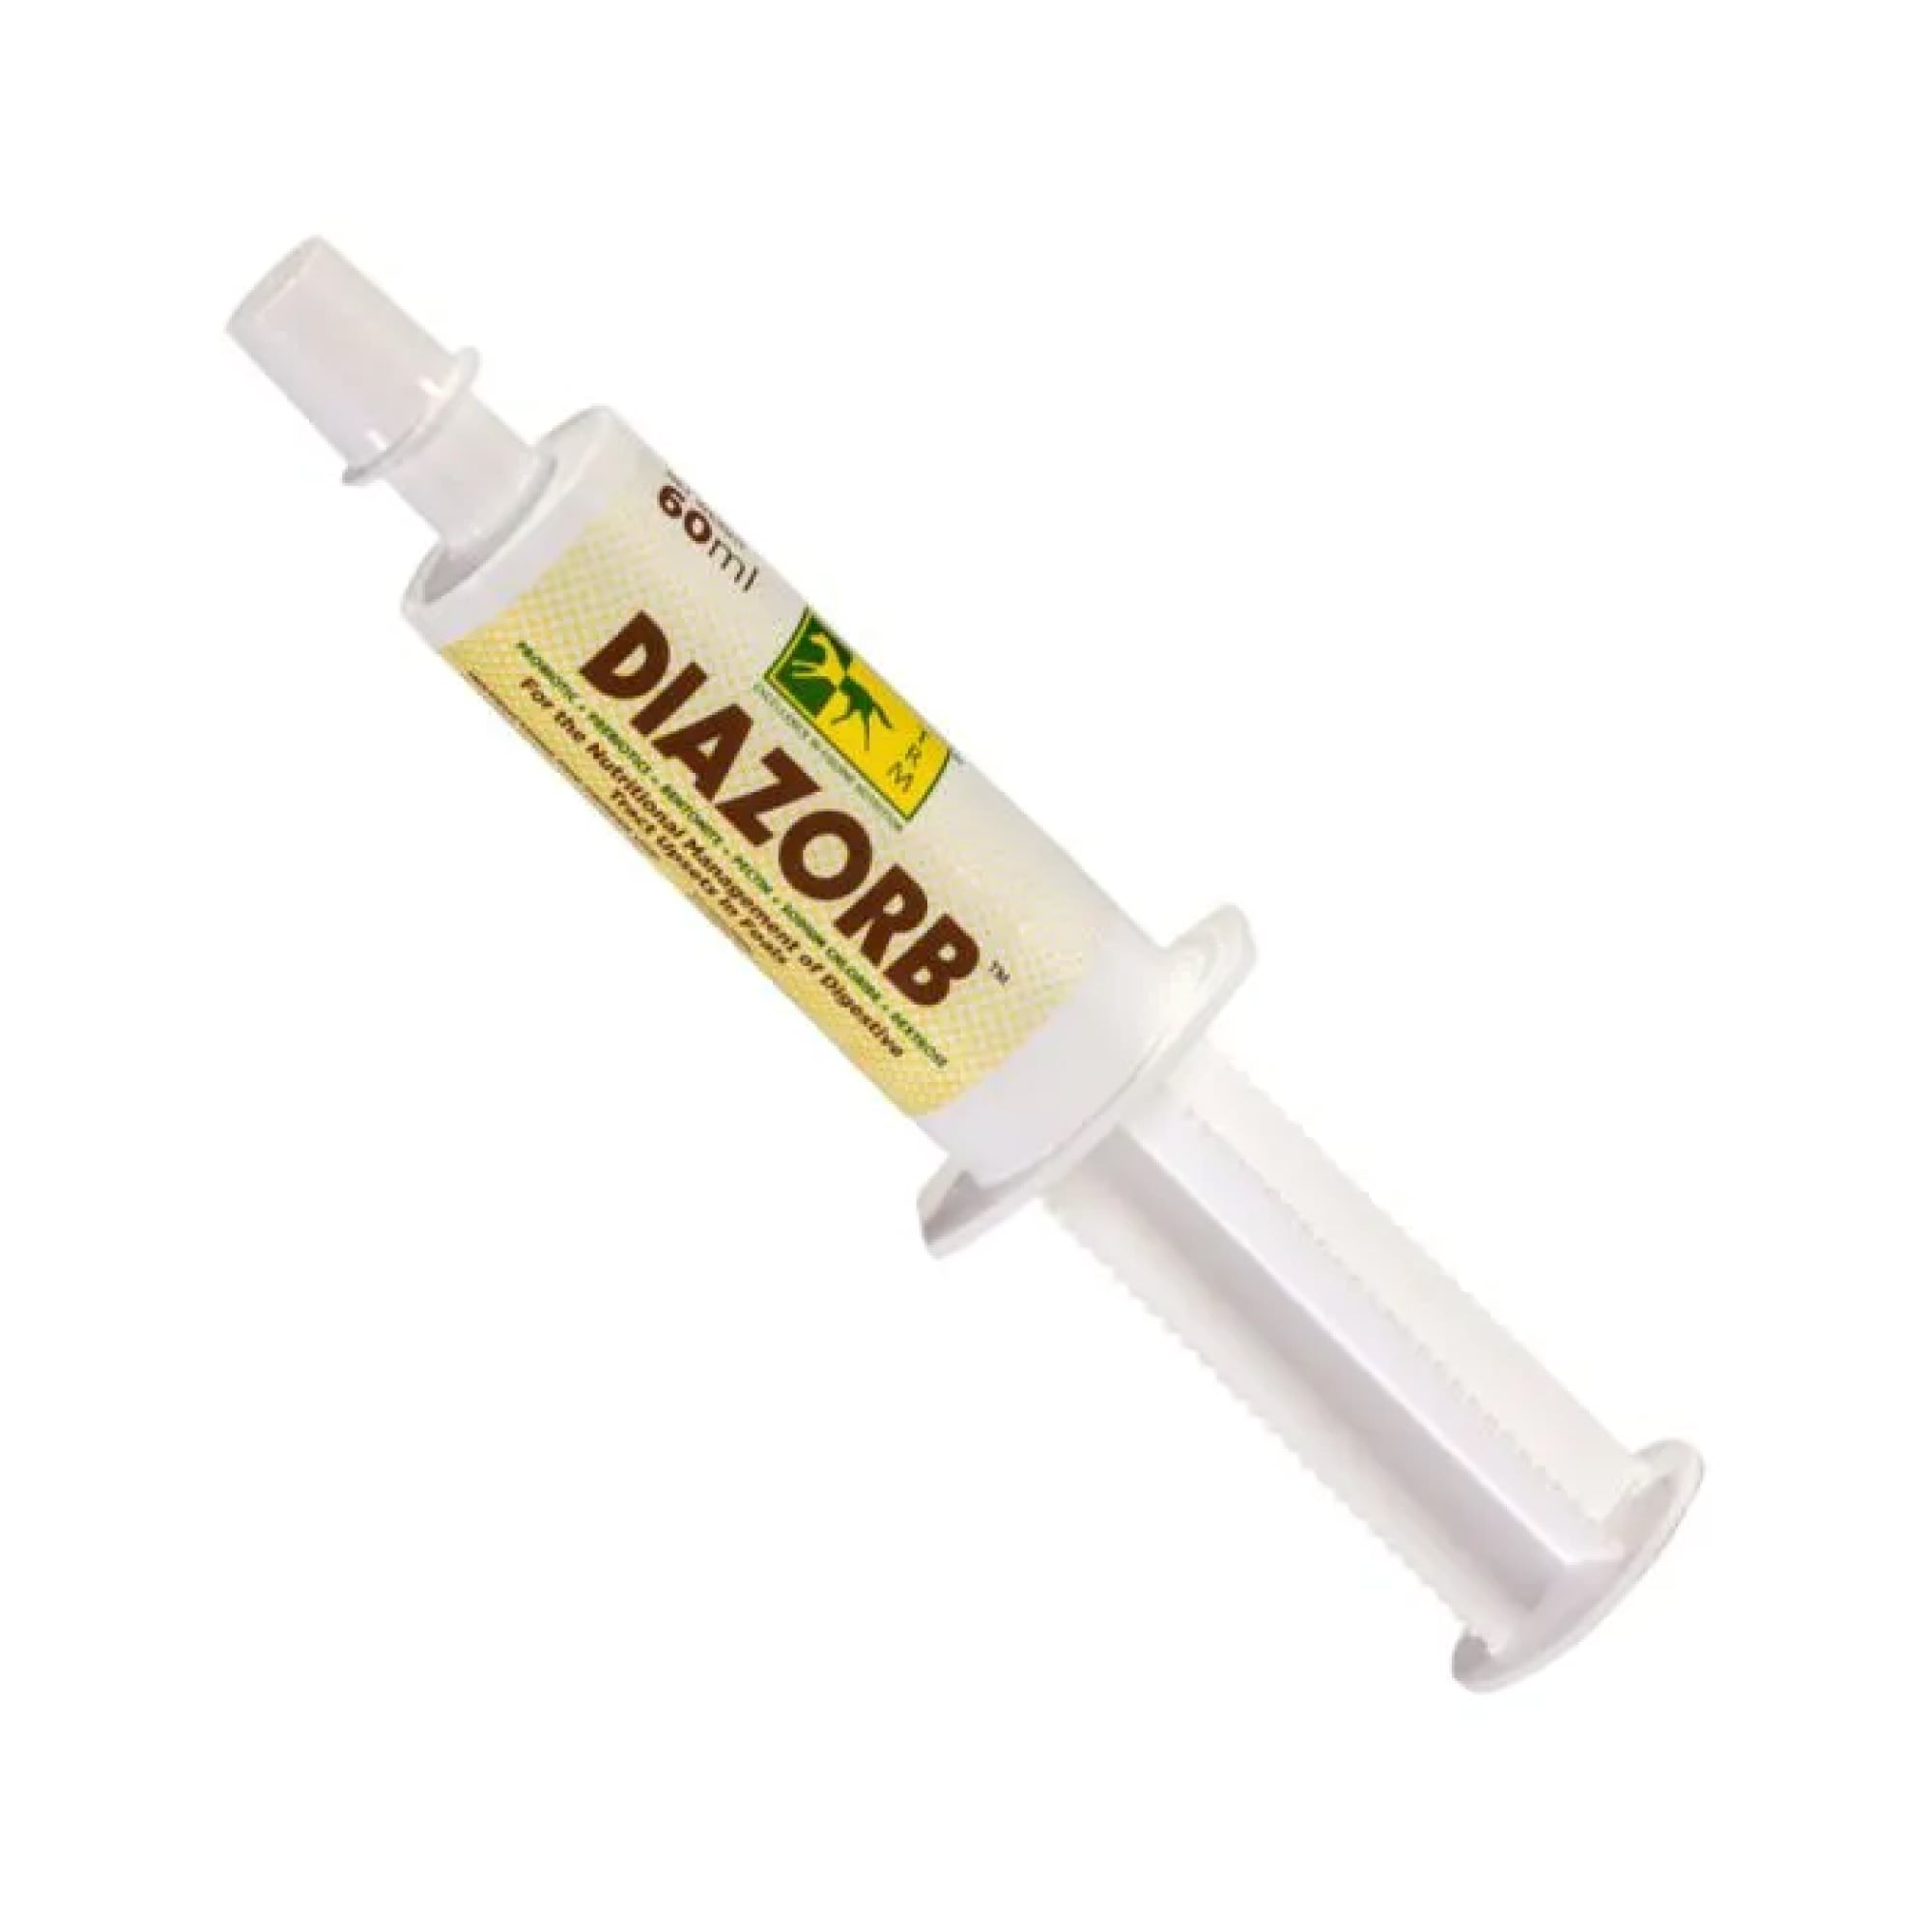 TRM Diazorb 60ml Syringe